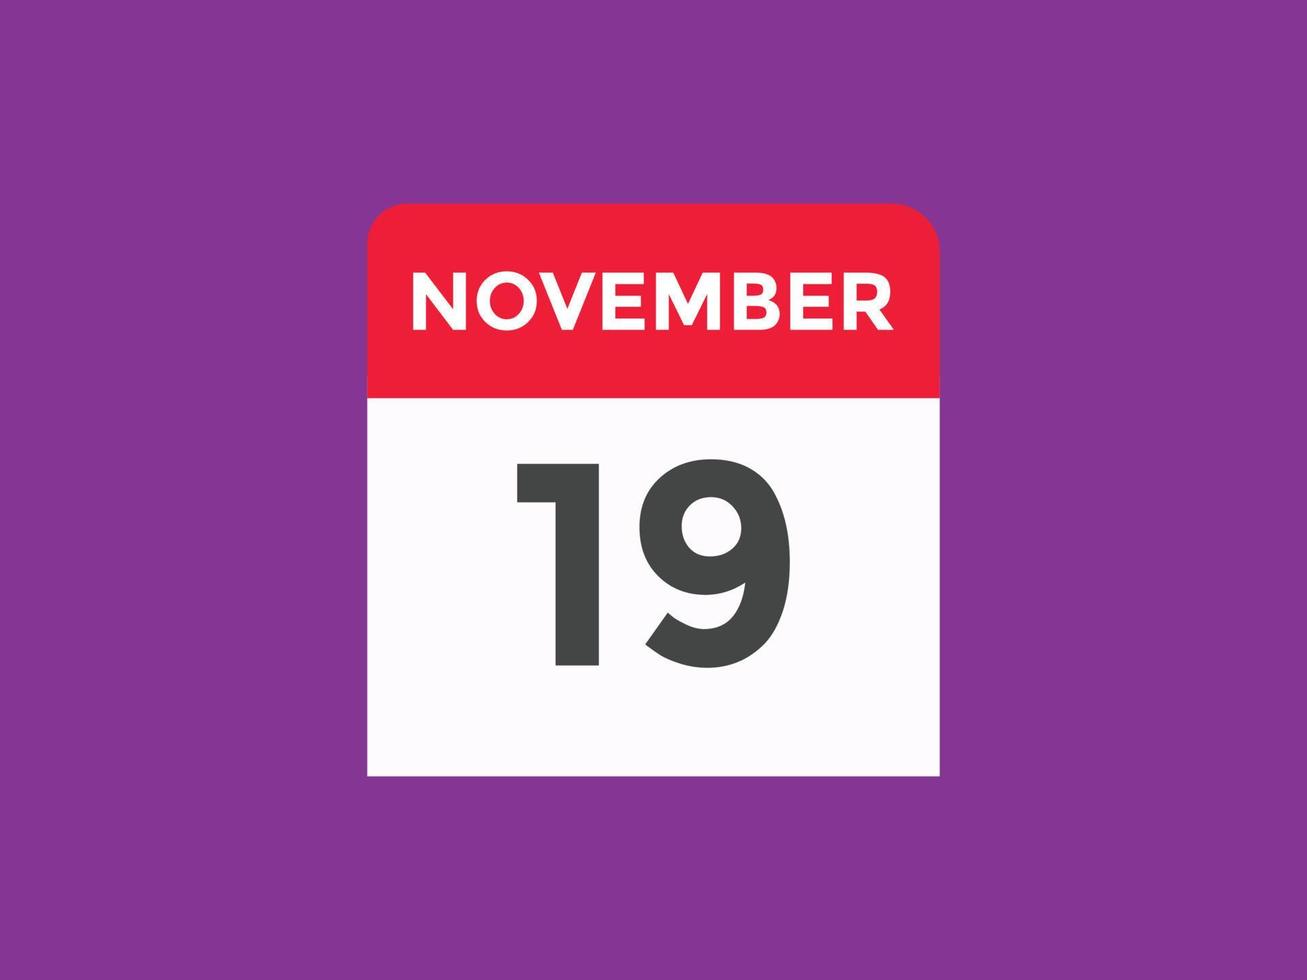 november 19 calendar reminder. 19th november daily calendar icon template. Calendar 19th november icon Design template. Vector illustration